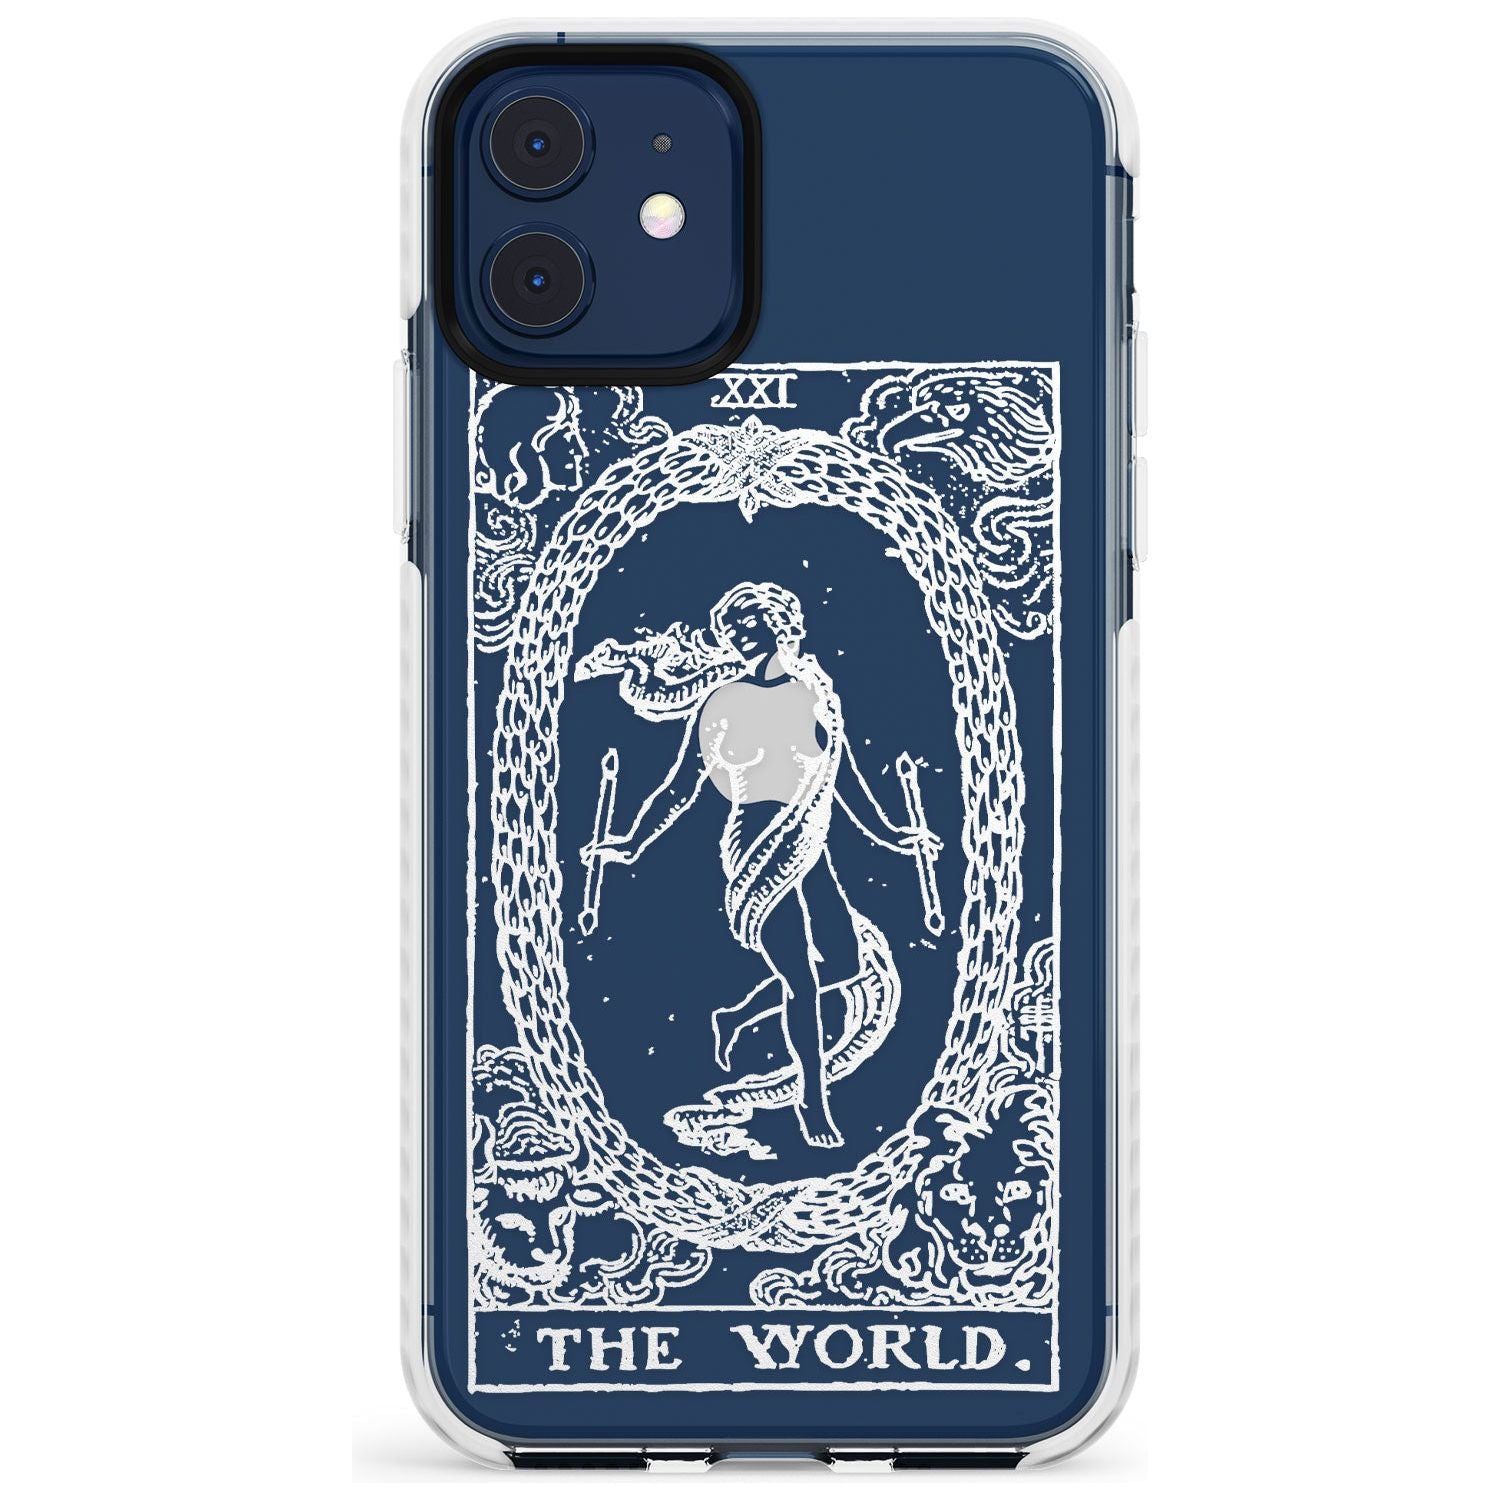 The World Tarot Card - White Transparent Slim TPU Phone Case for iPhone 11